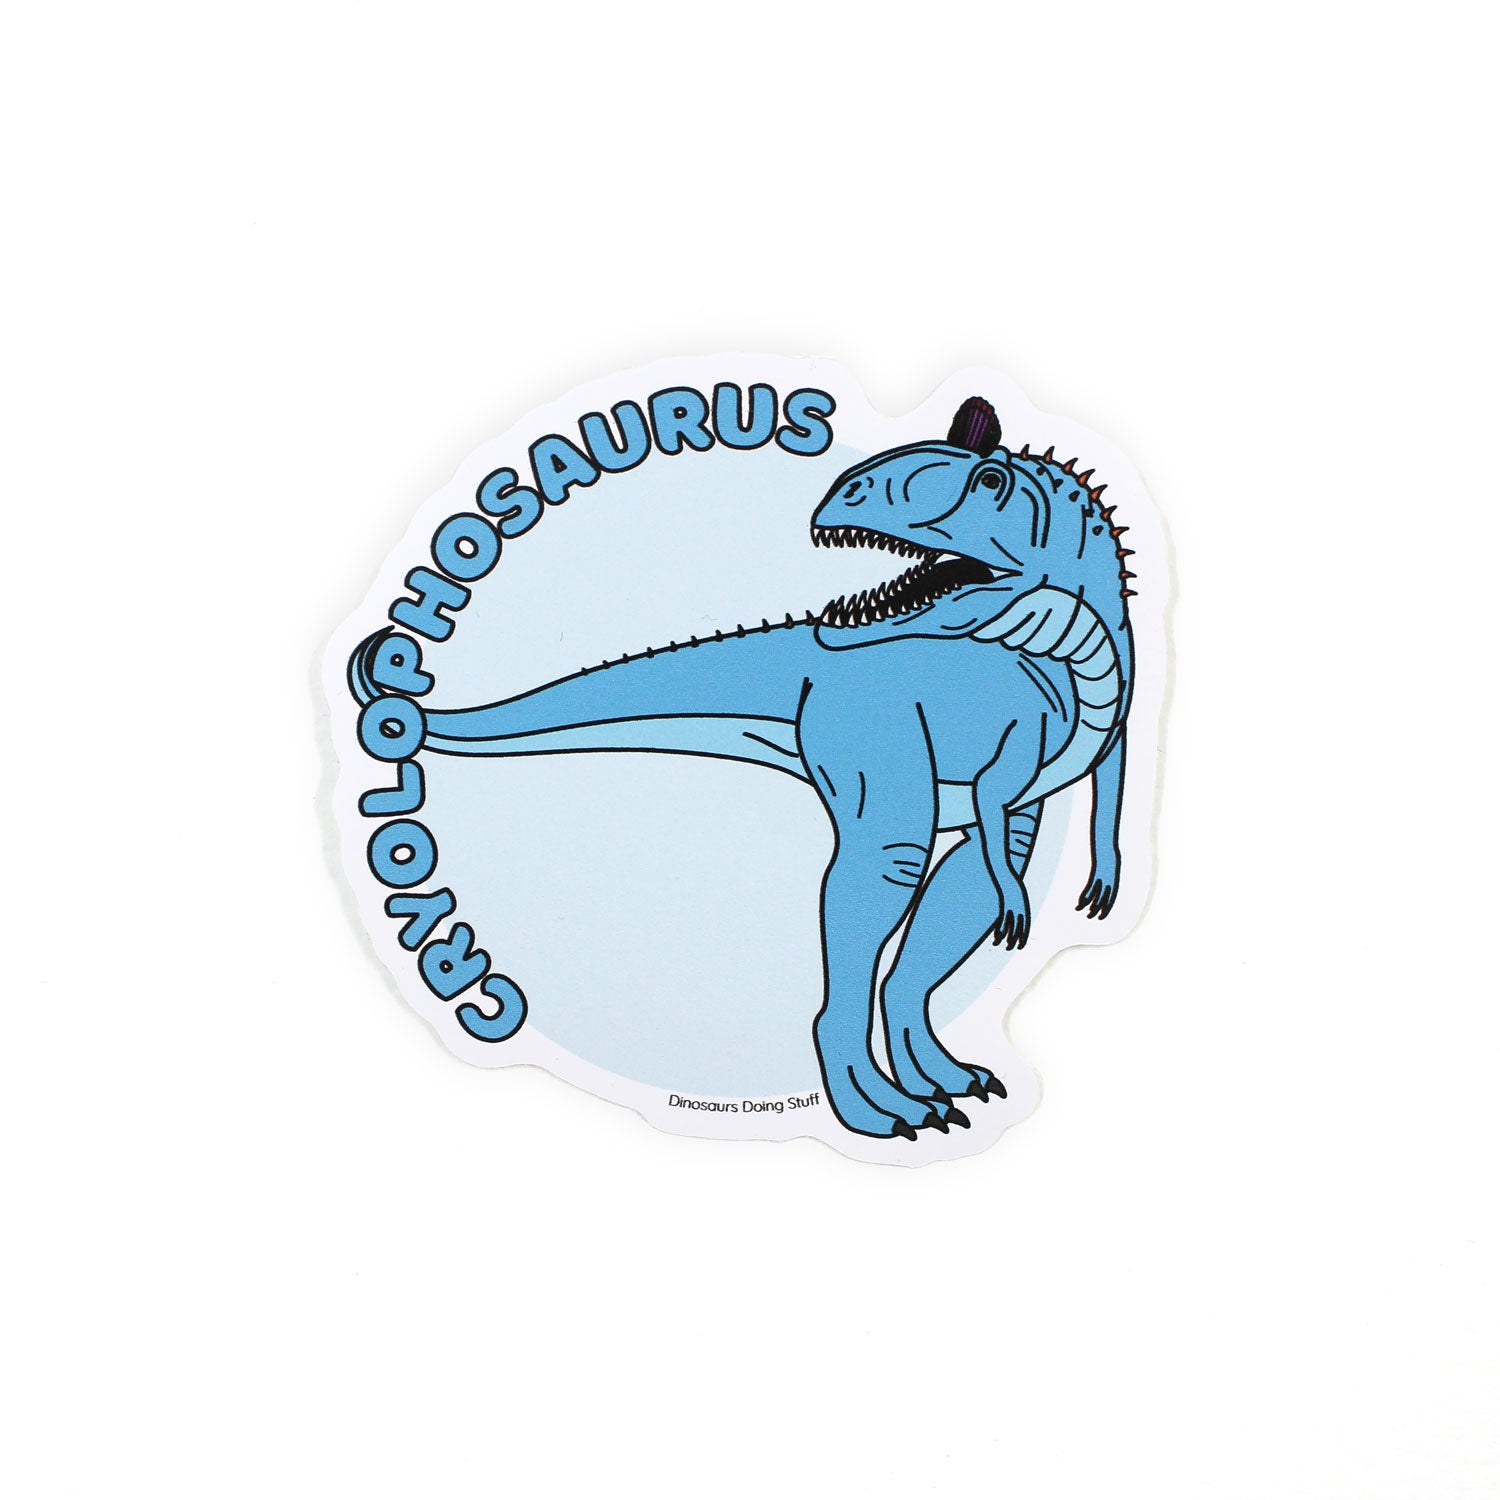 Titanoceratops dinosaur sticker on a white background